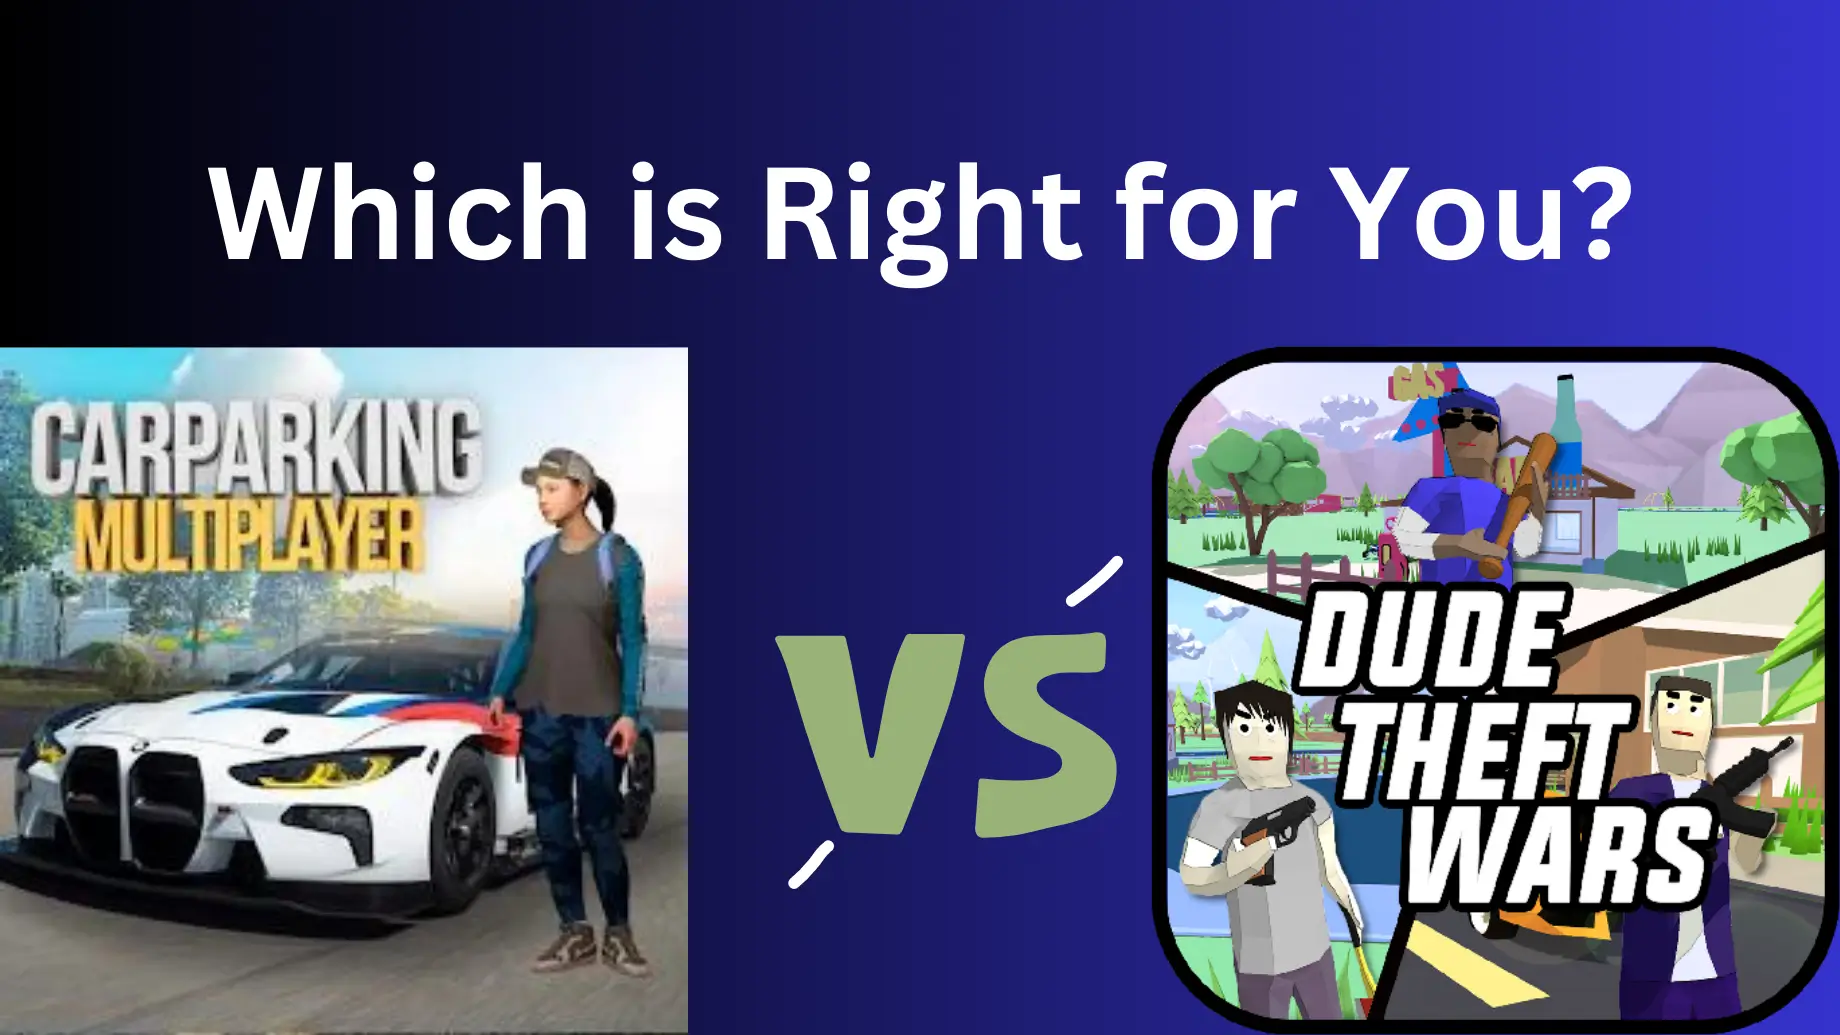 Dude Theft Wars vs. Car Parking Multiplayer